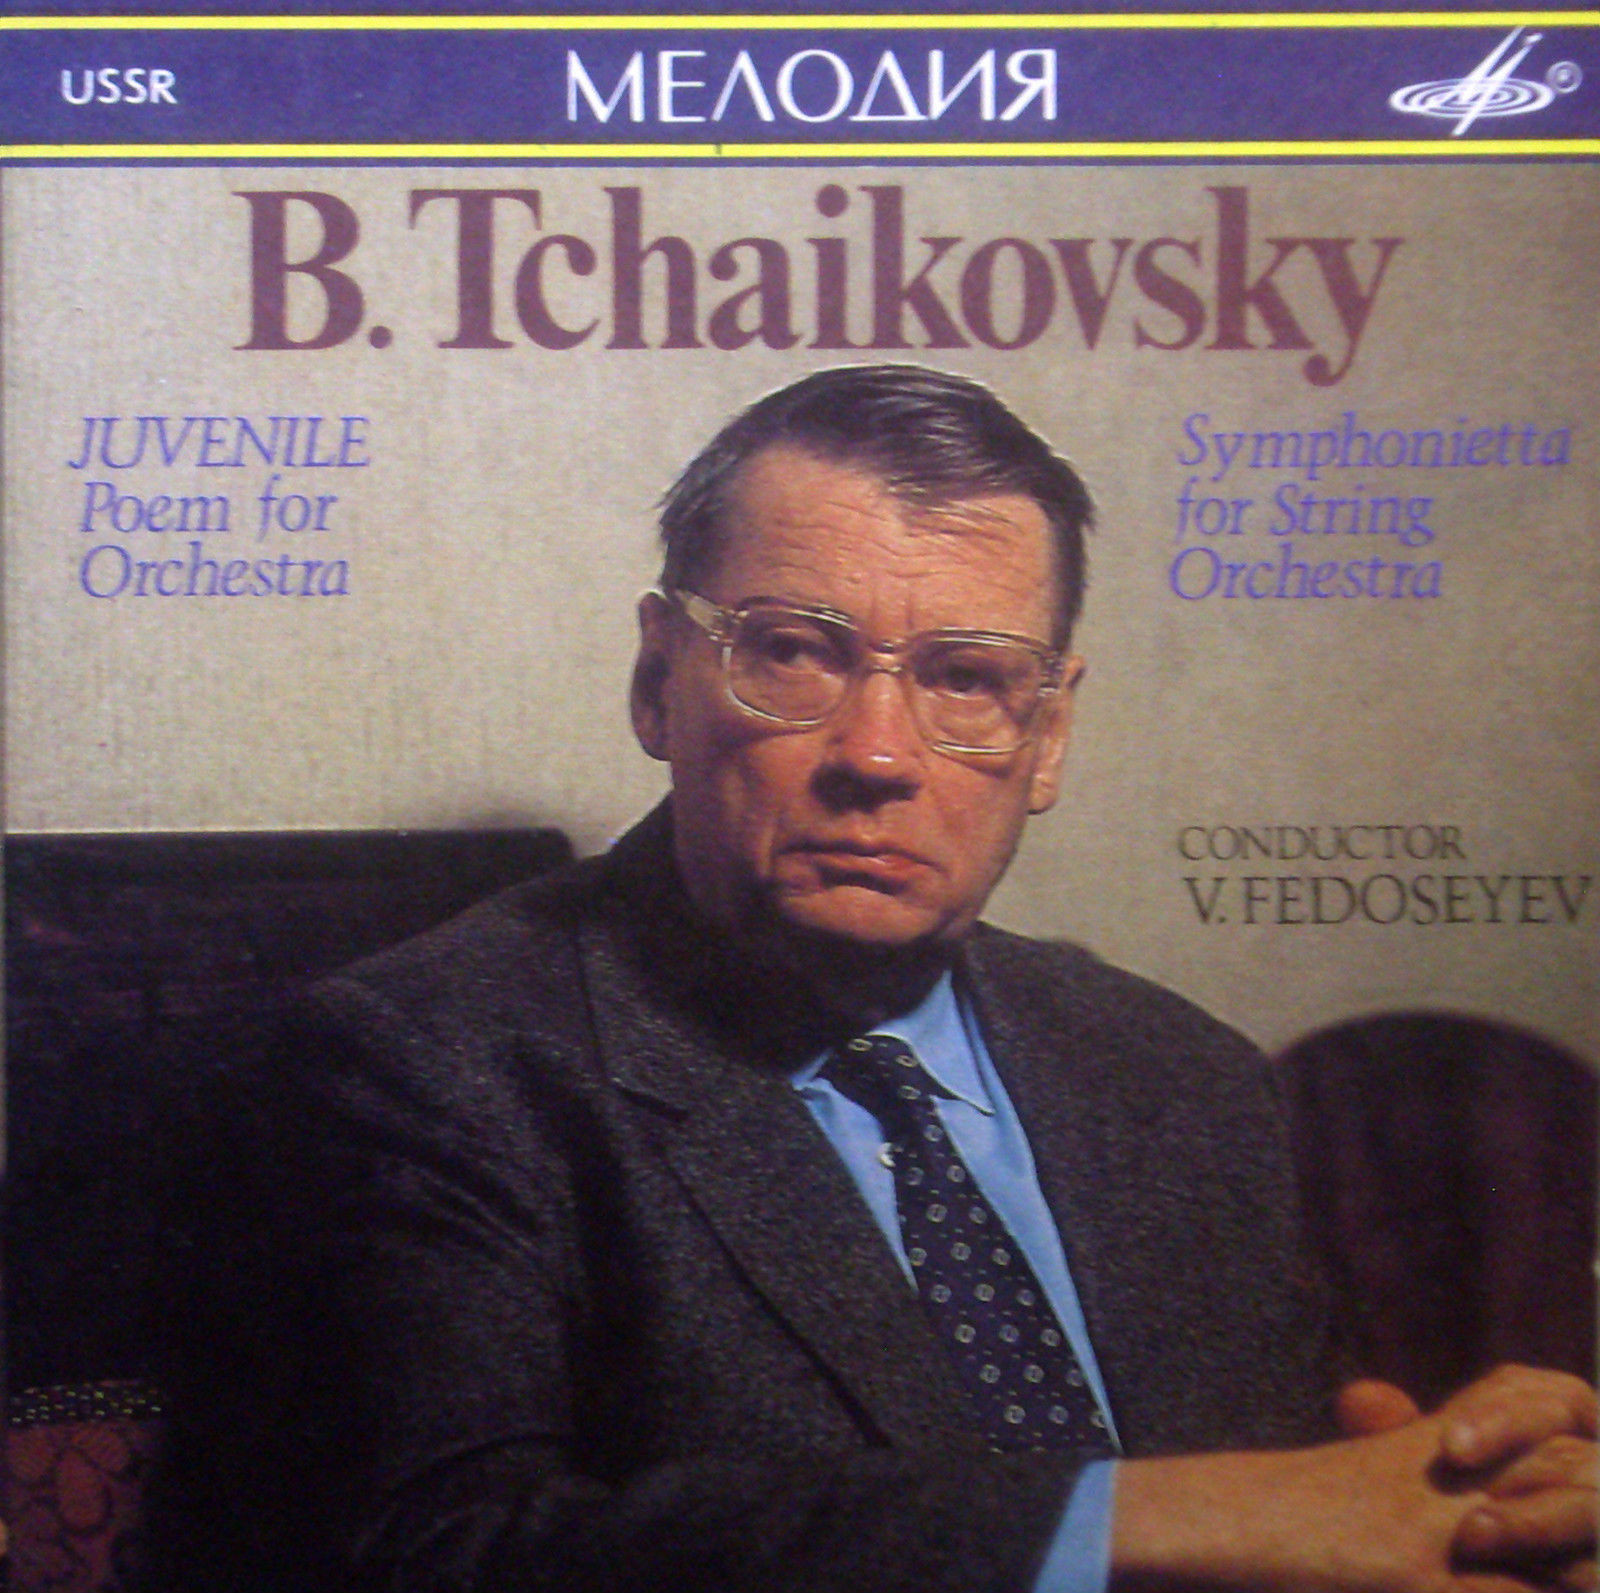 Boris Tchaikovsky